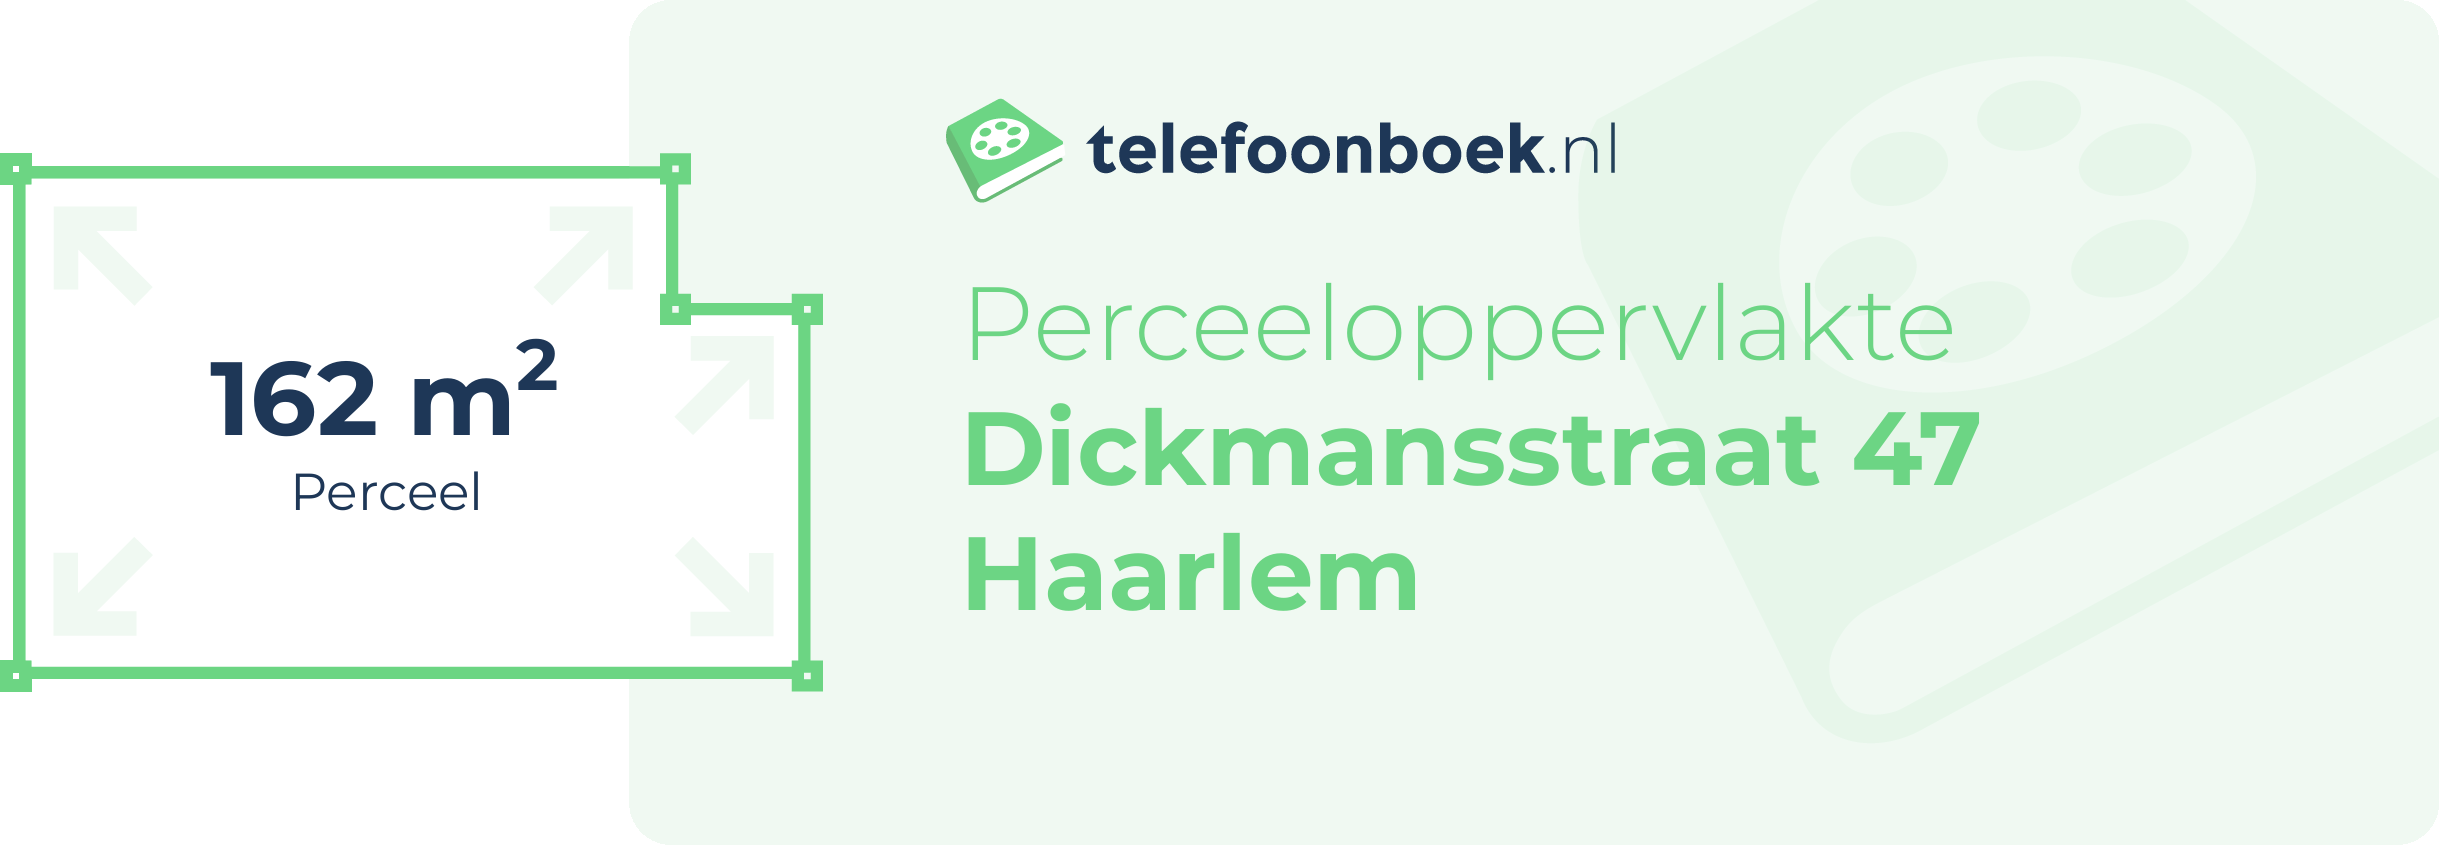 Perceeloppervlakte Dickmansstraat 47 Haarlem